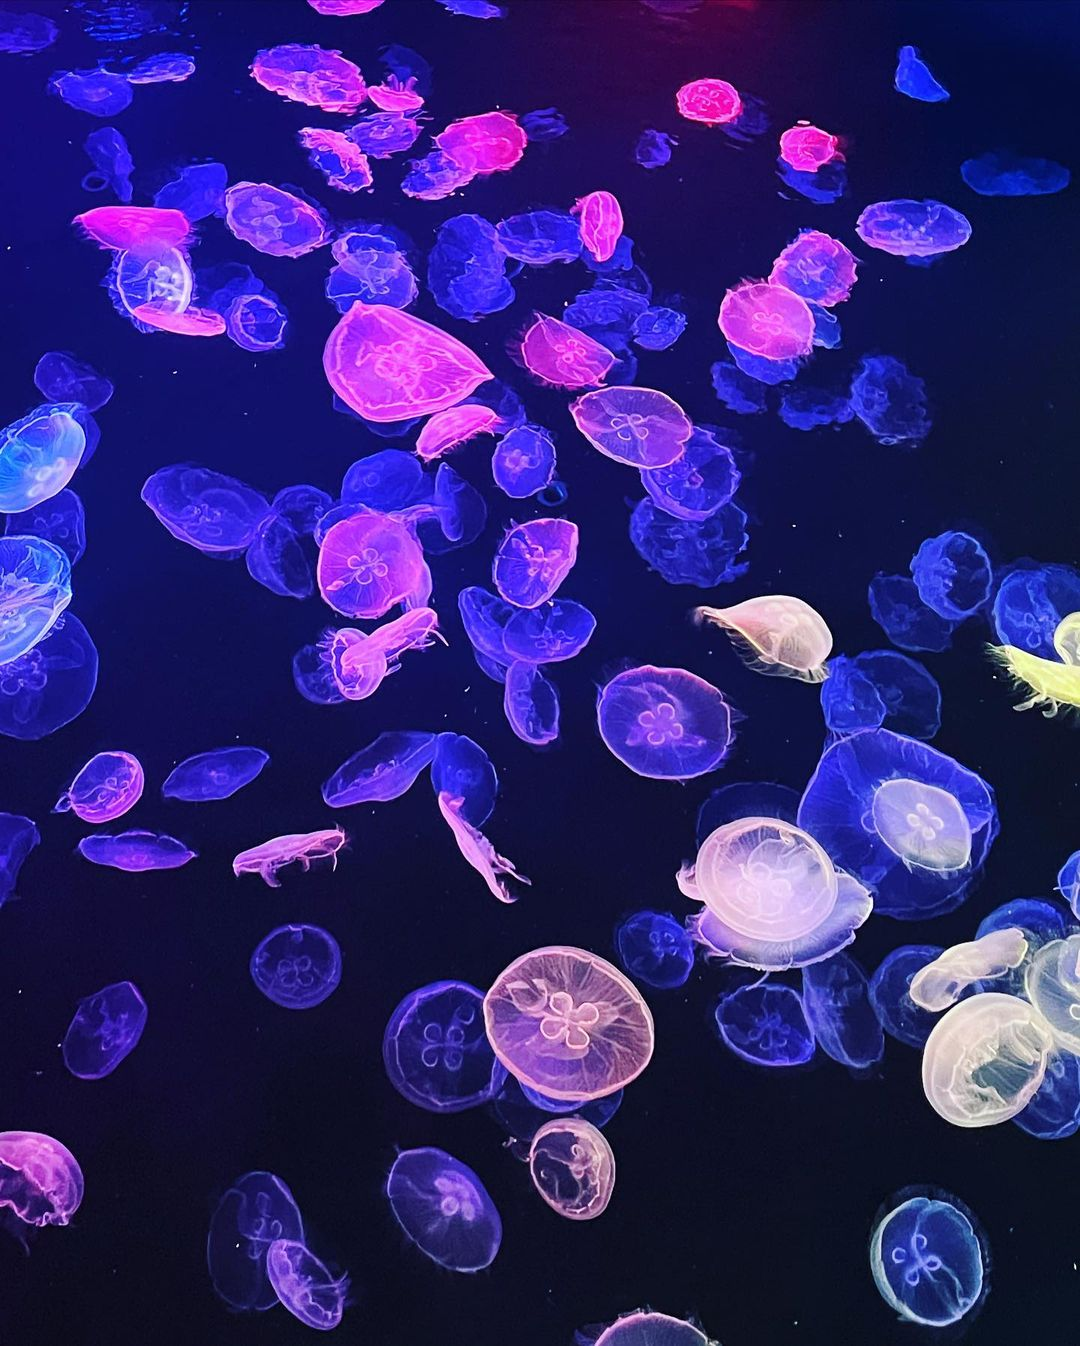 Sumida Aquarium - jellyfish tank